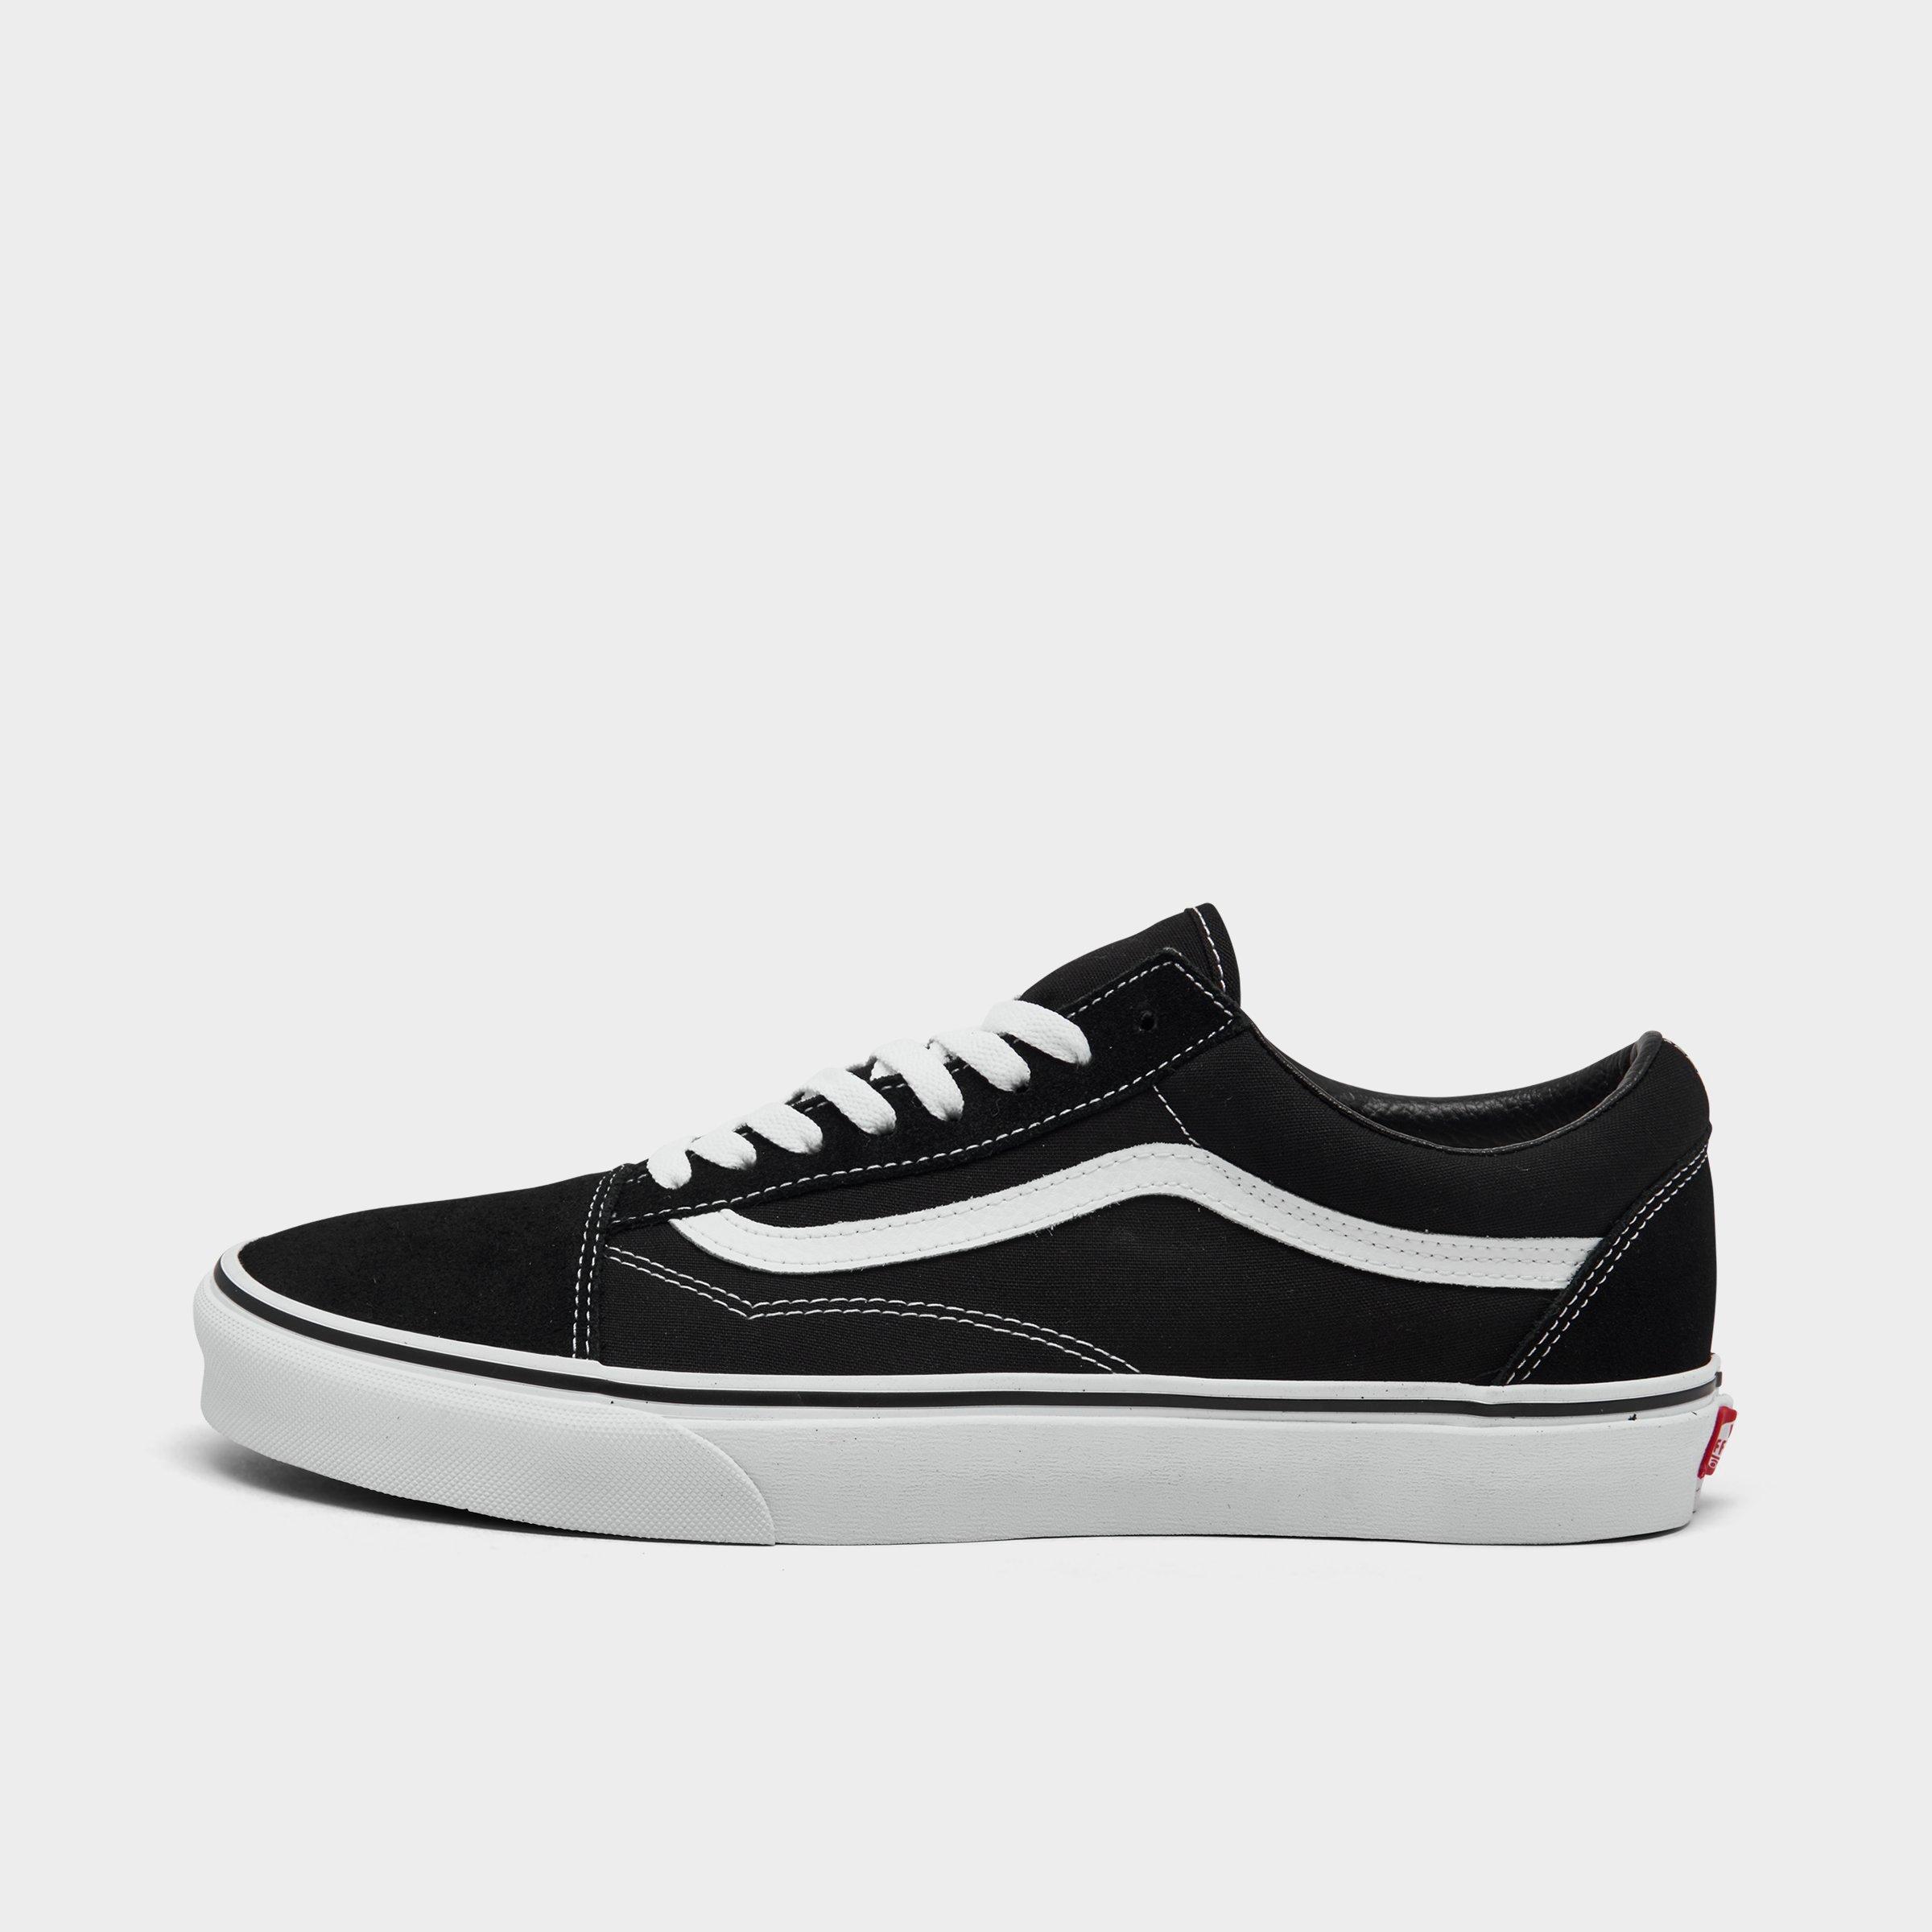 vans black shoes price